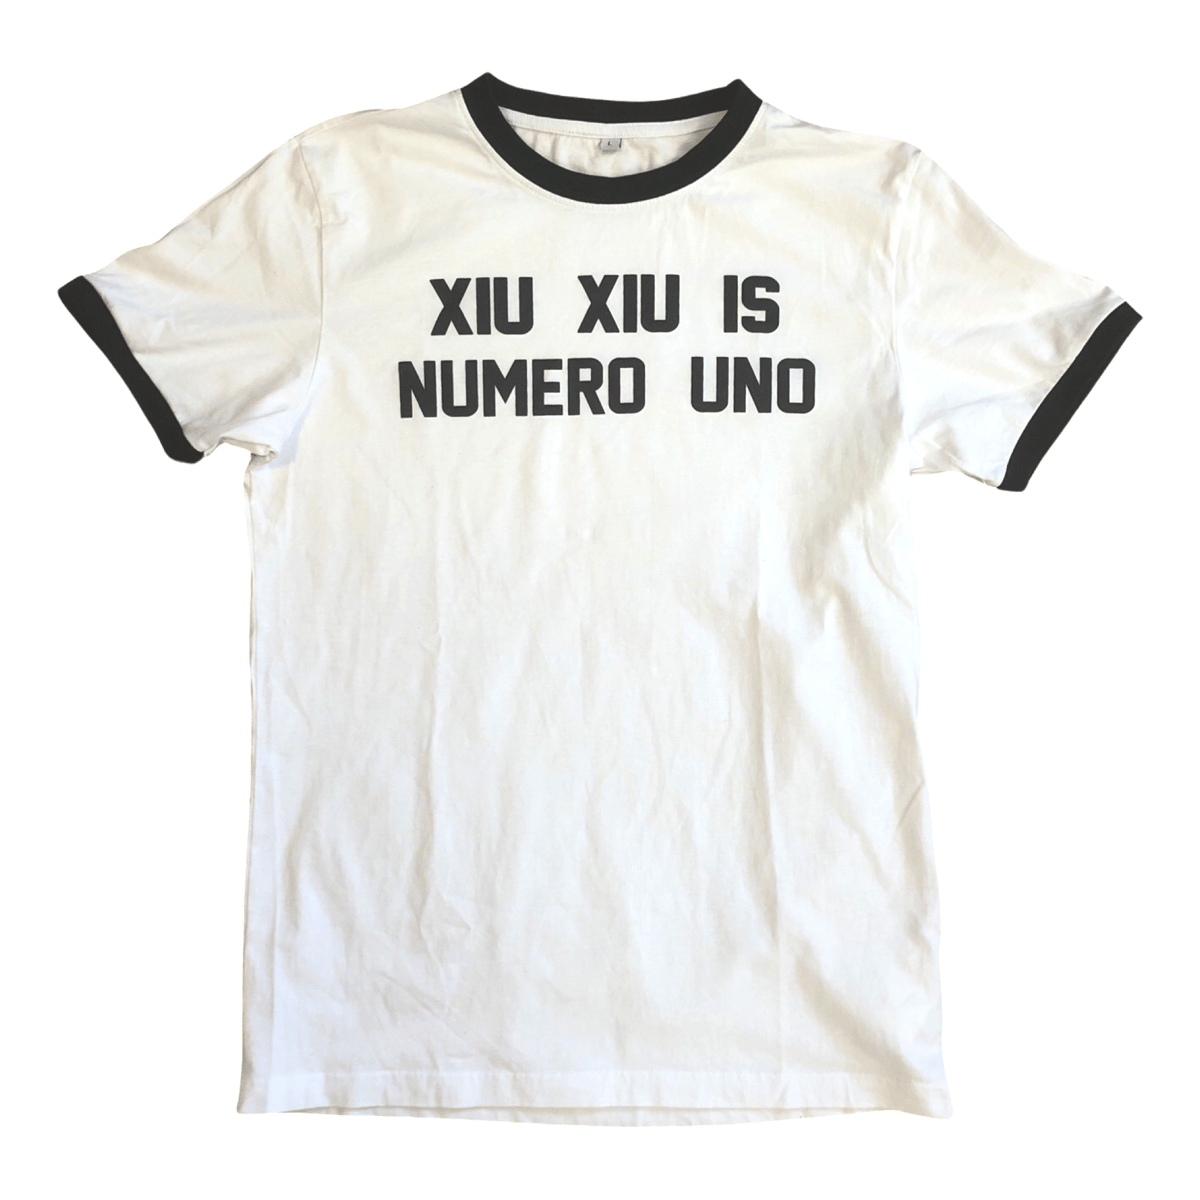 Xiu Xiu Is Numero Uno